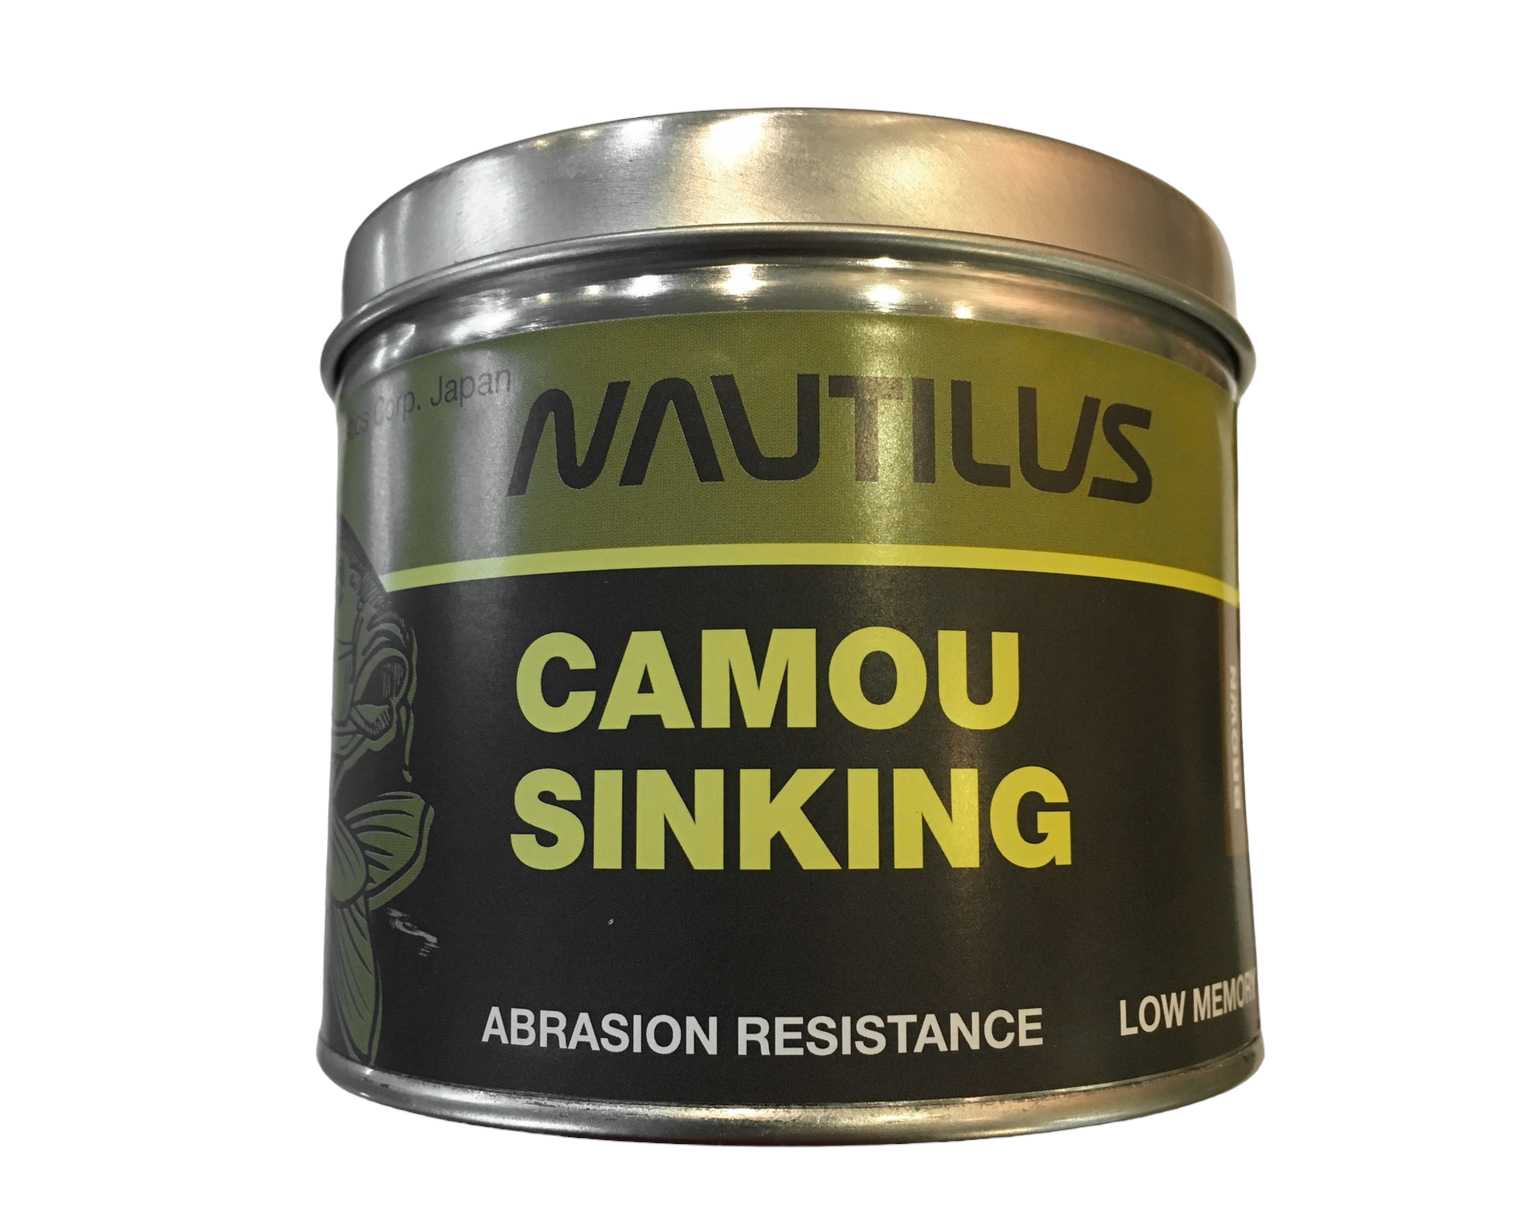 Леска Nautilus Camou Brown Sinking 1200м 0,302мм - фото 1